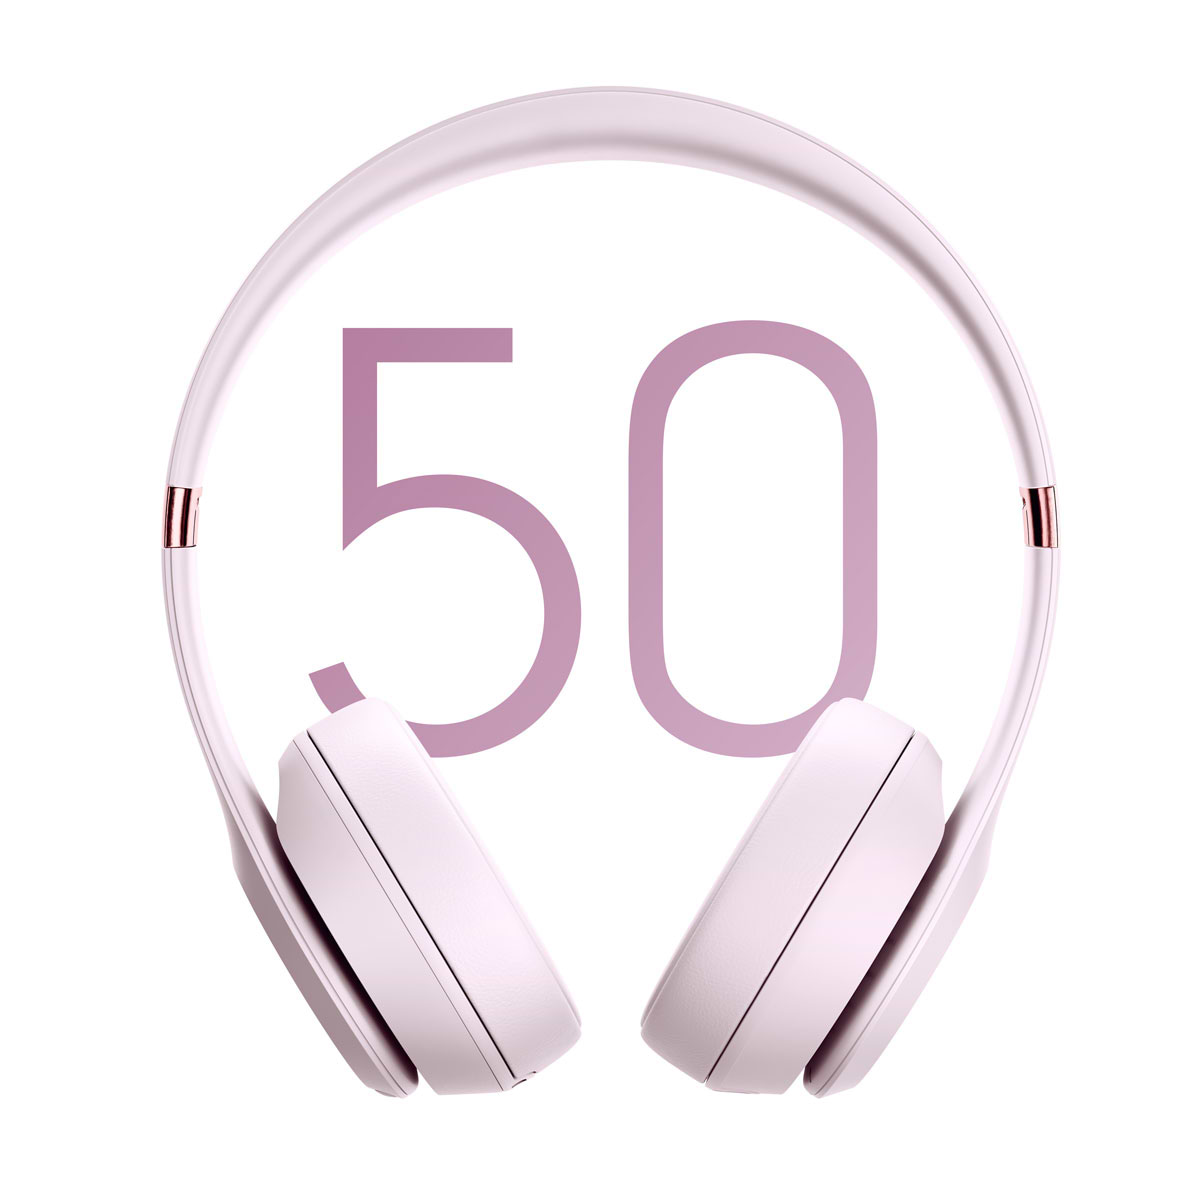 Beats Solo 4 - אוזניות קשת אלחוטיות בצבע ורוד שנה אחריות ע״י היבואן הרשמי 